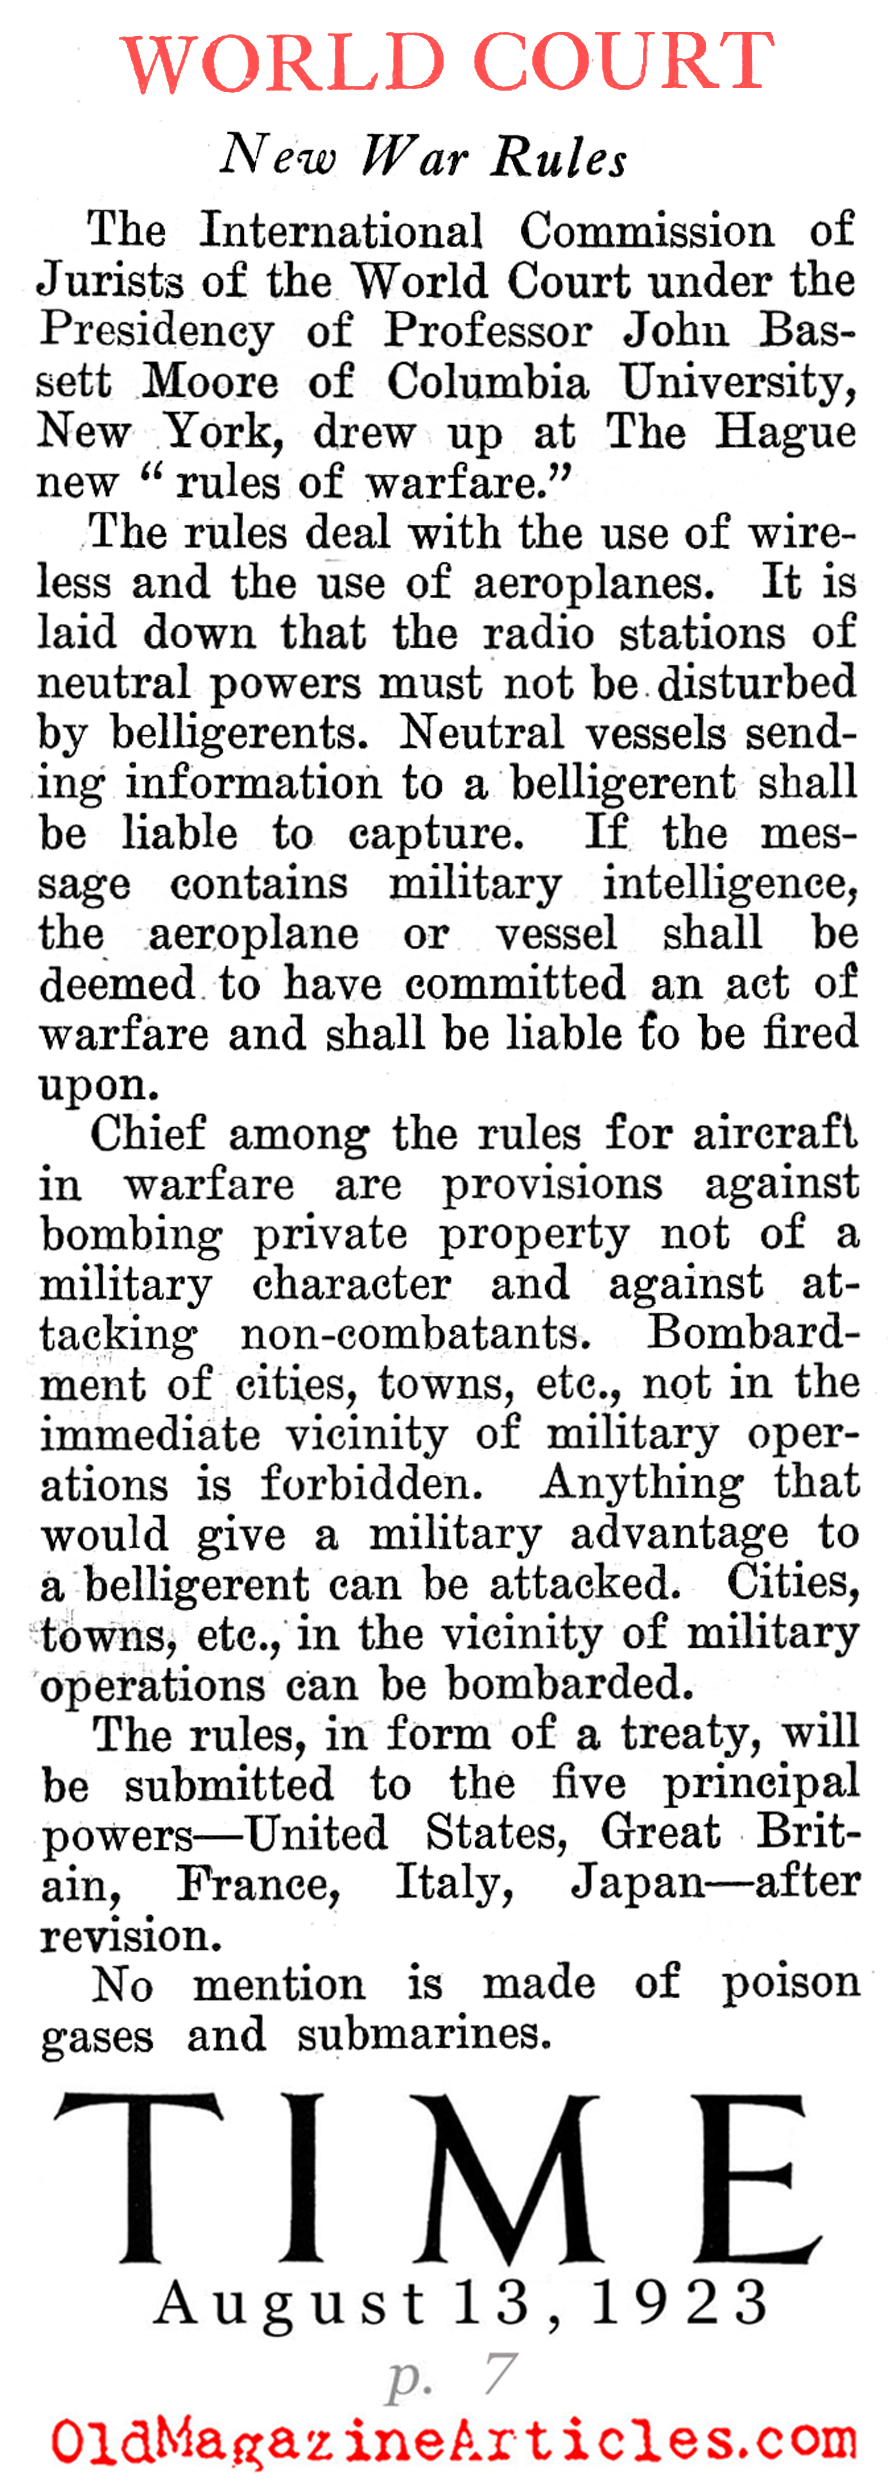 New Rules of Warfare (Time Magazine, 1923)